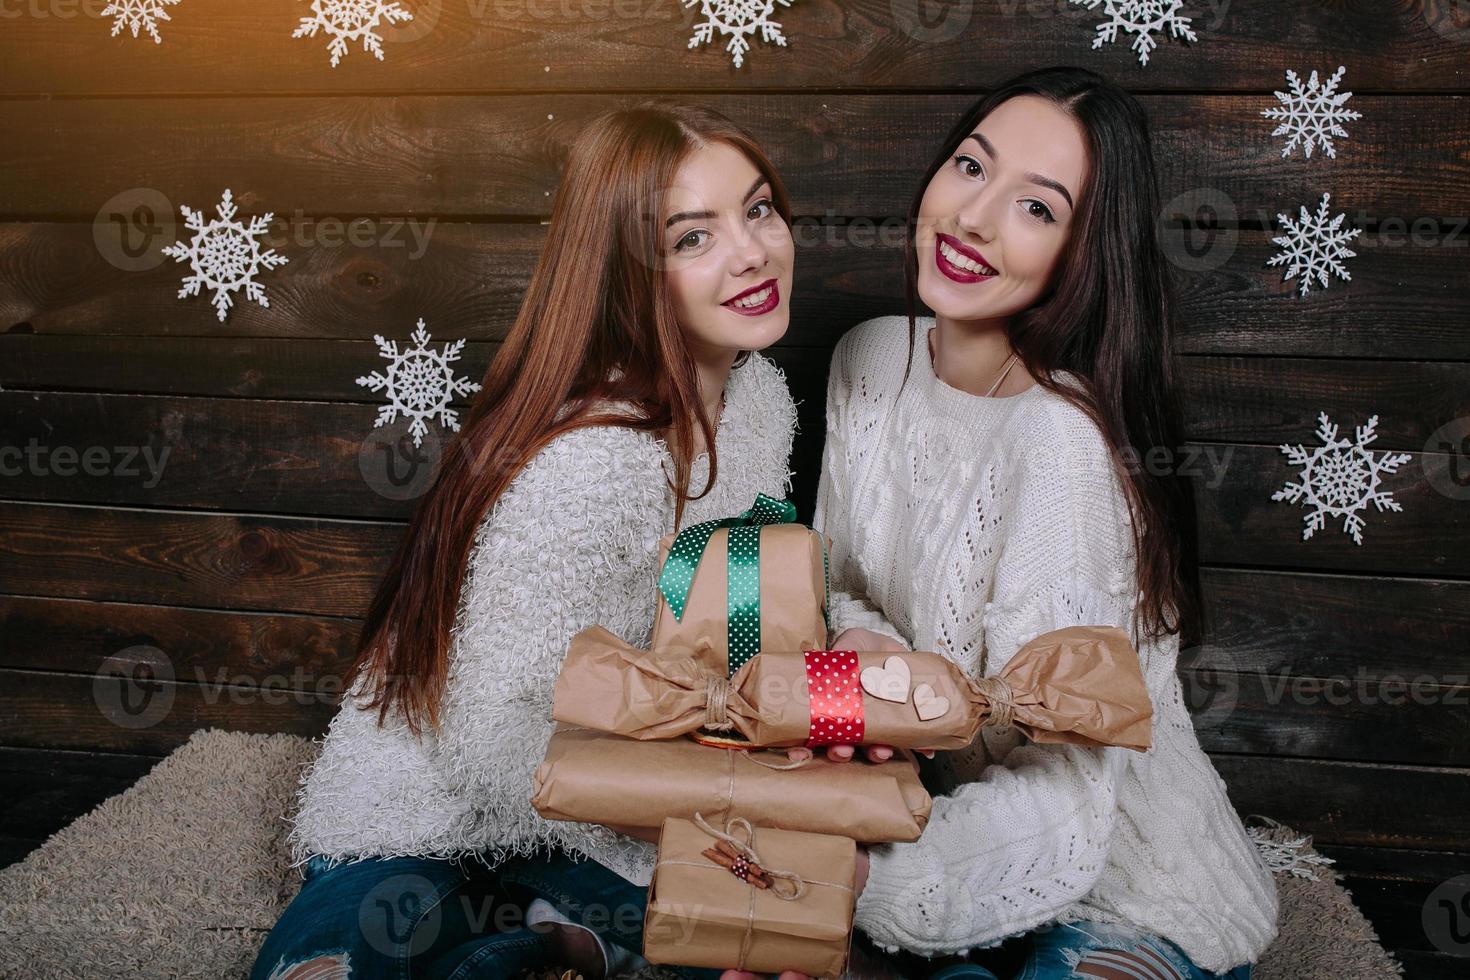 twee mooi meisjes aanbod cadeaus naar camera foto